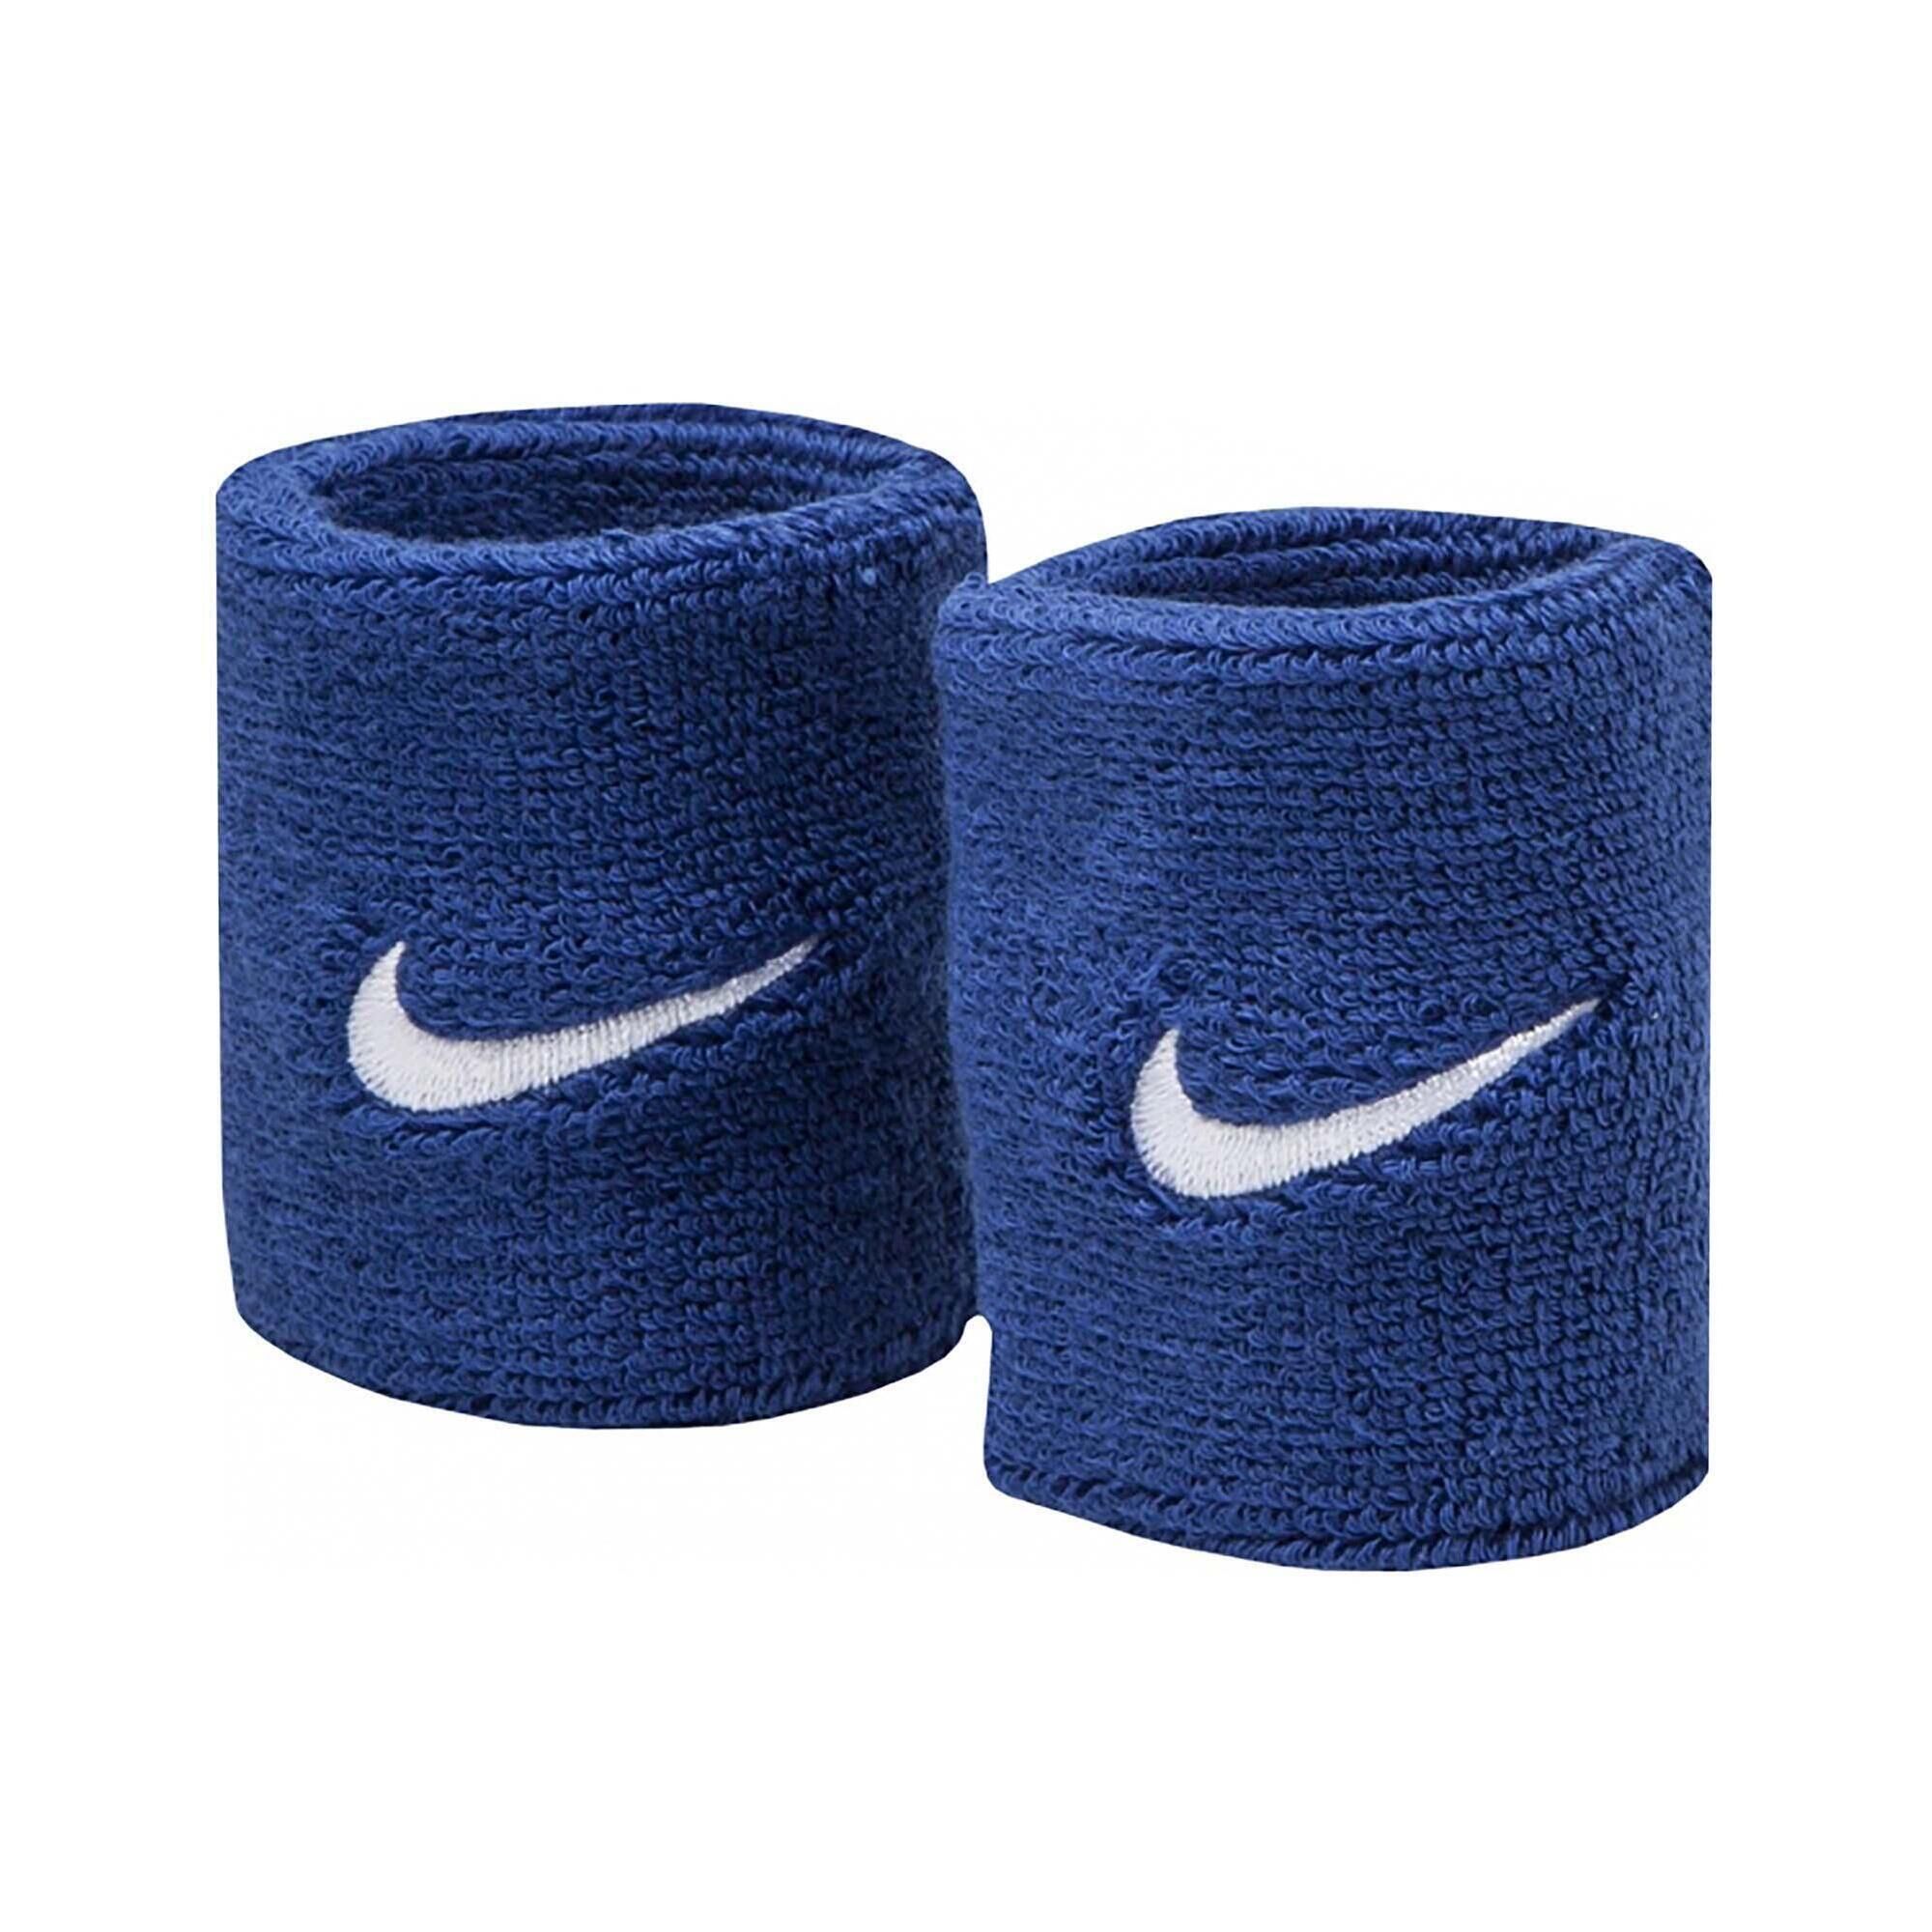 NIKE Nike Swoosh Wristbands Light Blue Cuffs Adult